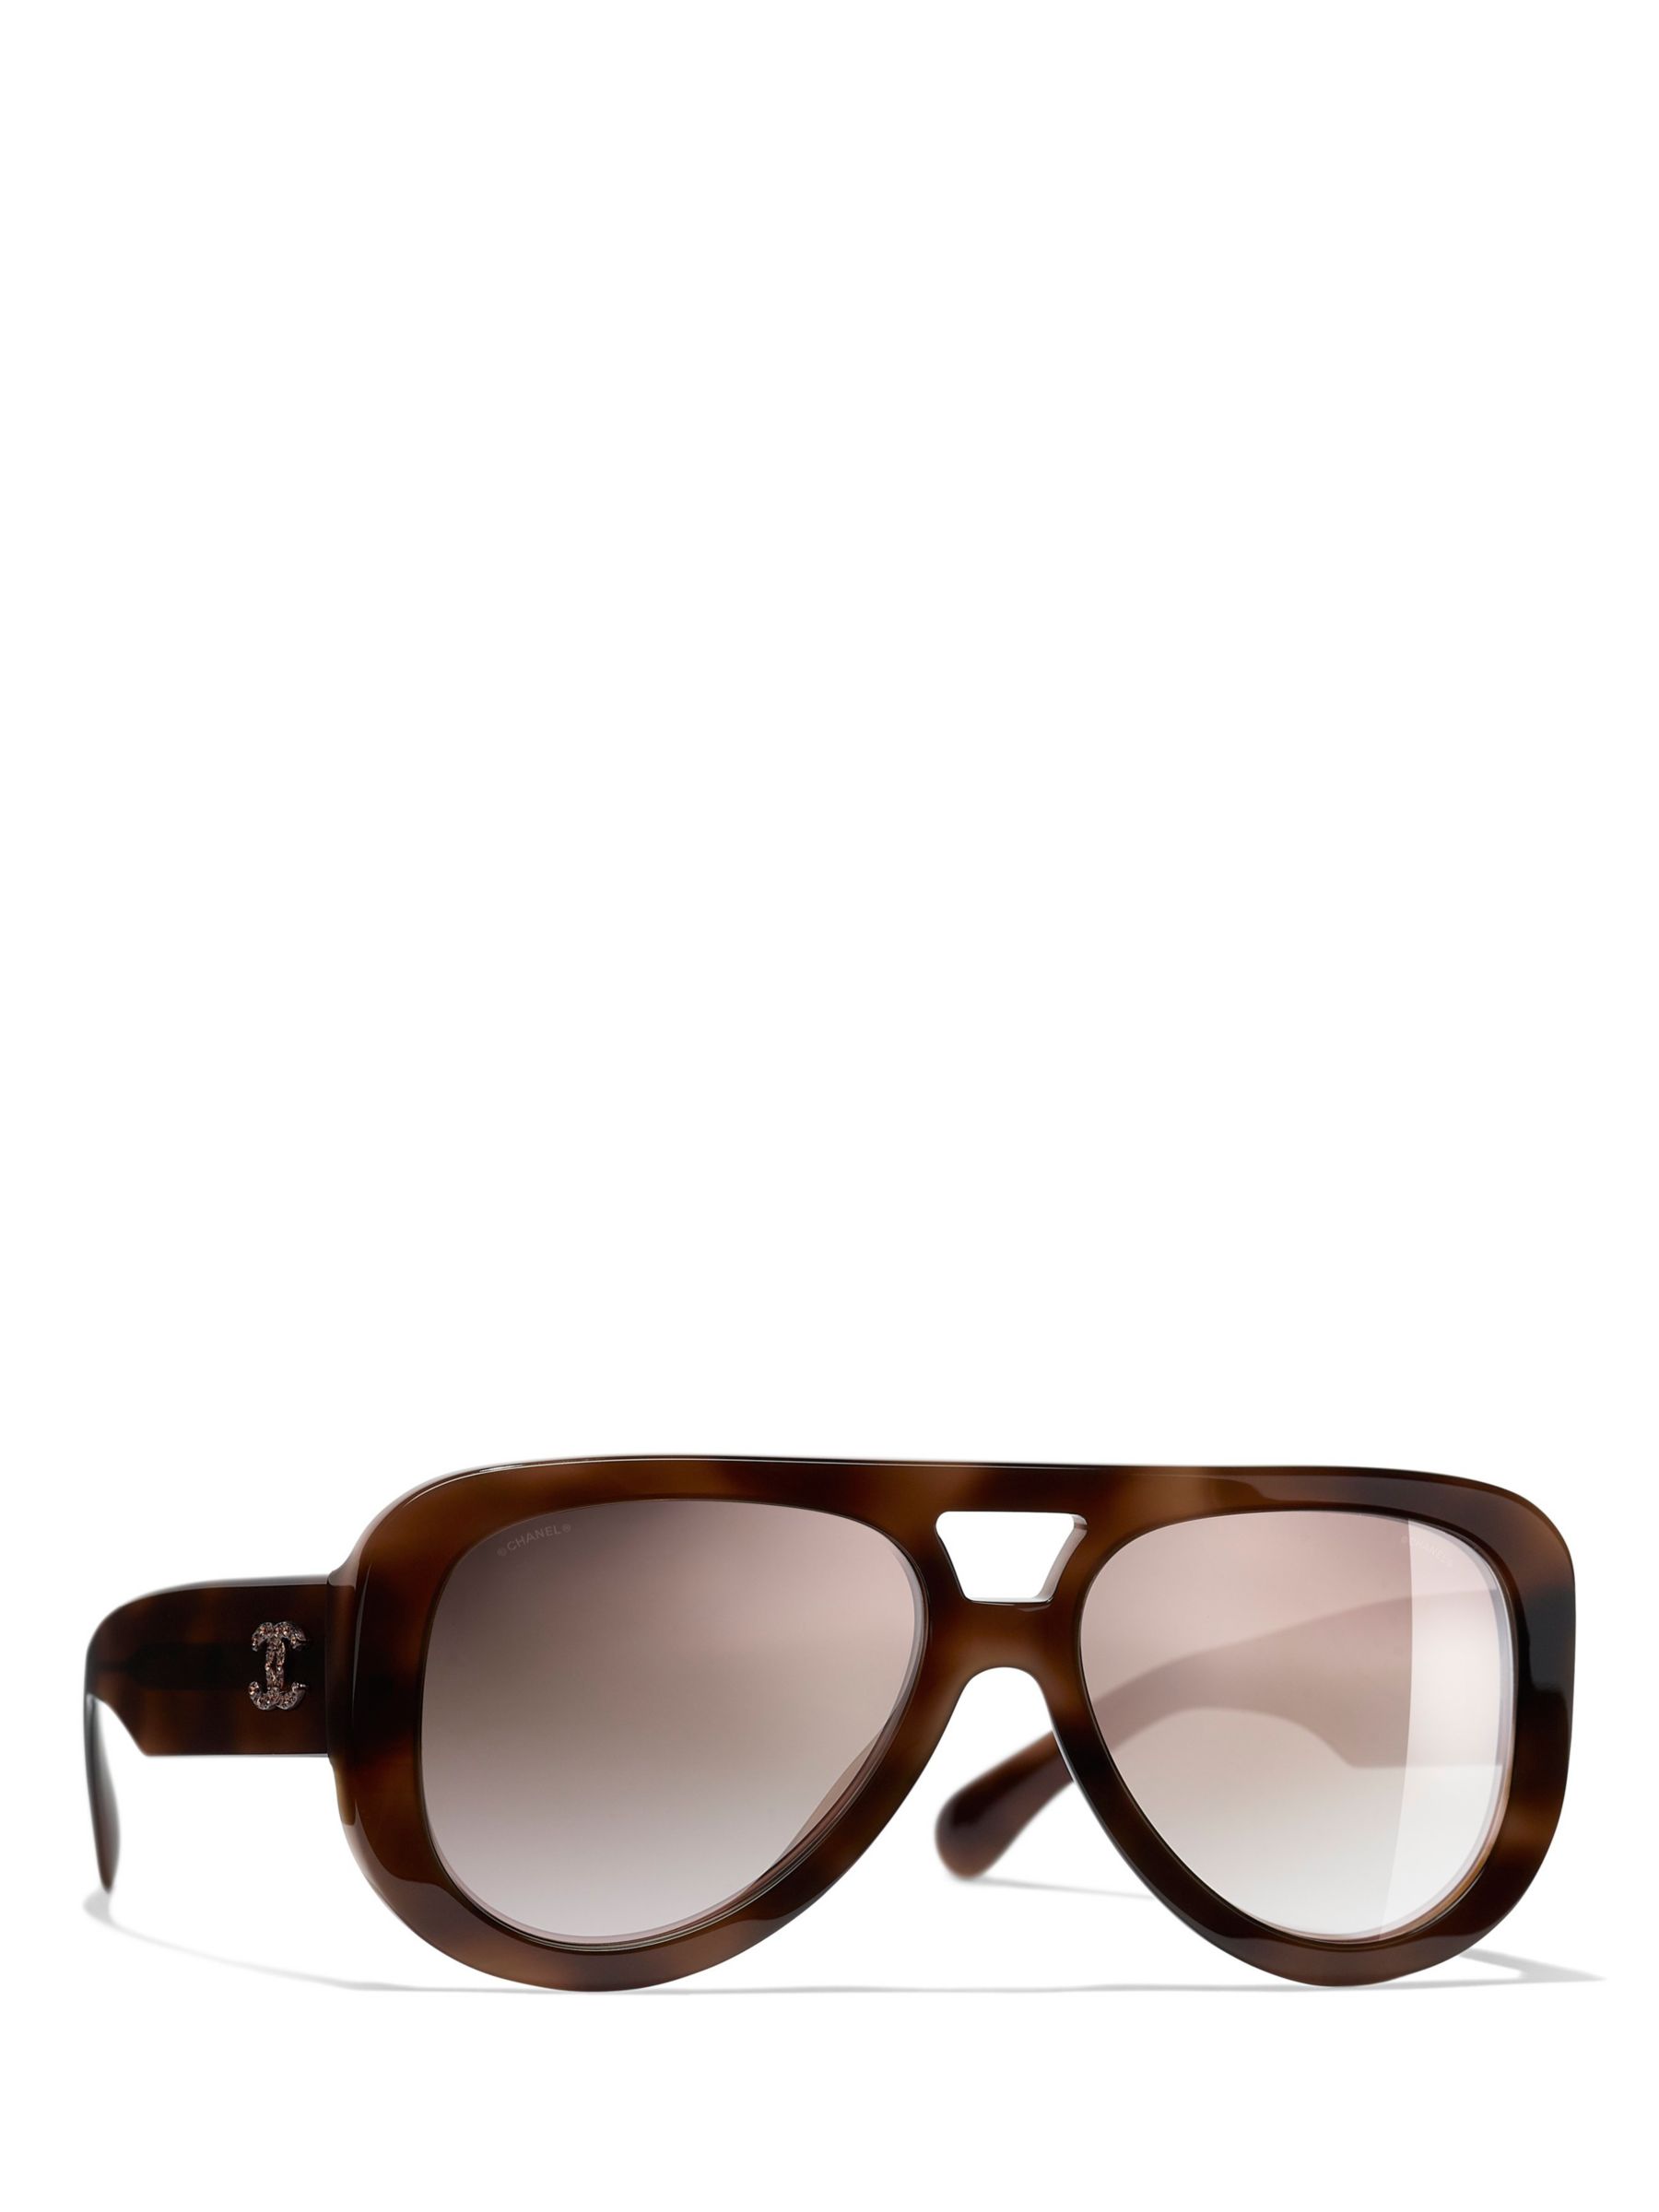 Chanel 0ch5417 Sunglasses in Brown